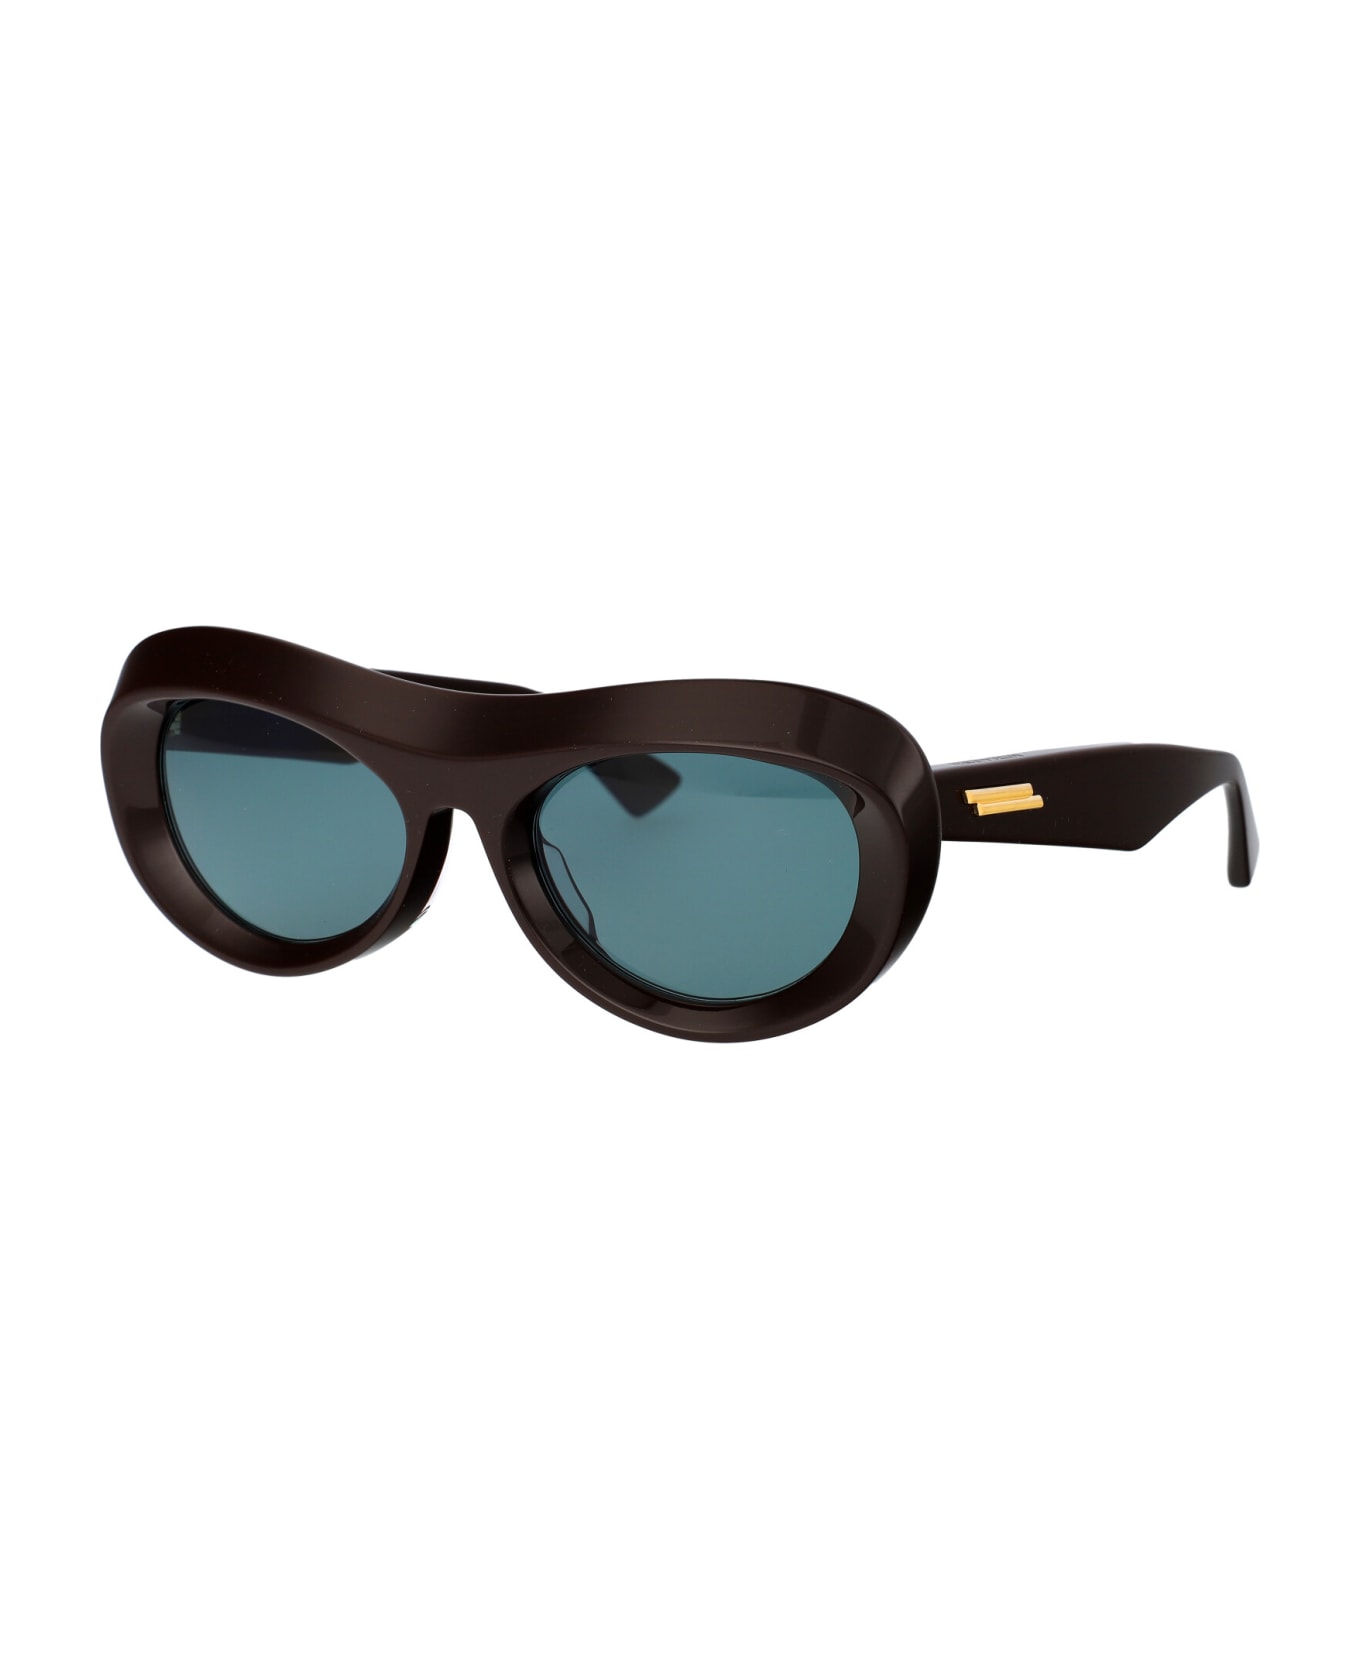 Bottega Veneta Eyewear Bv1284s Sunglasses - 004 BROWN BROWN GREEN